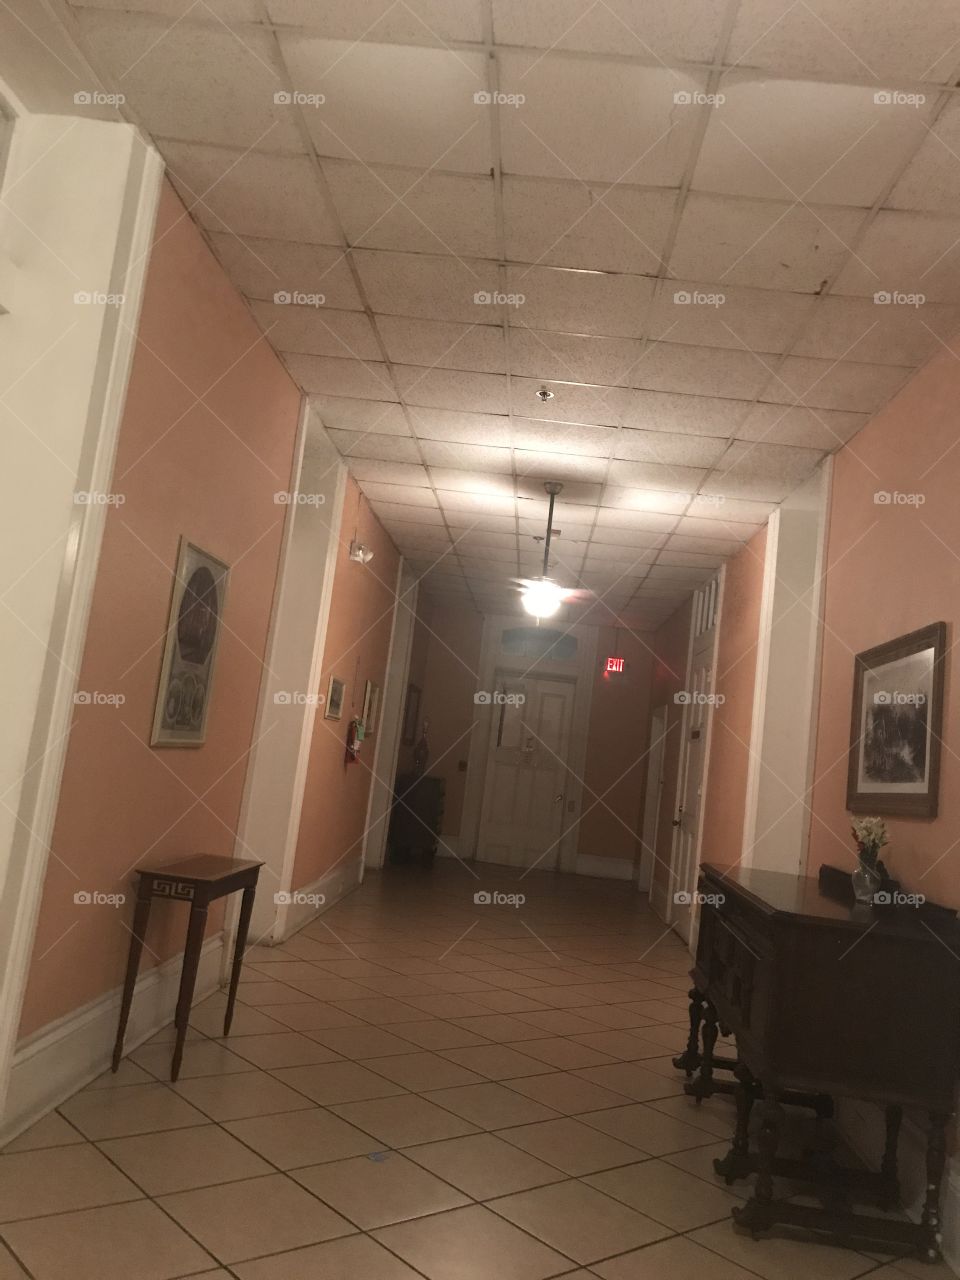 Creepy hotel